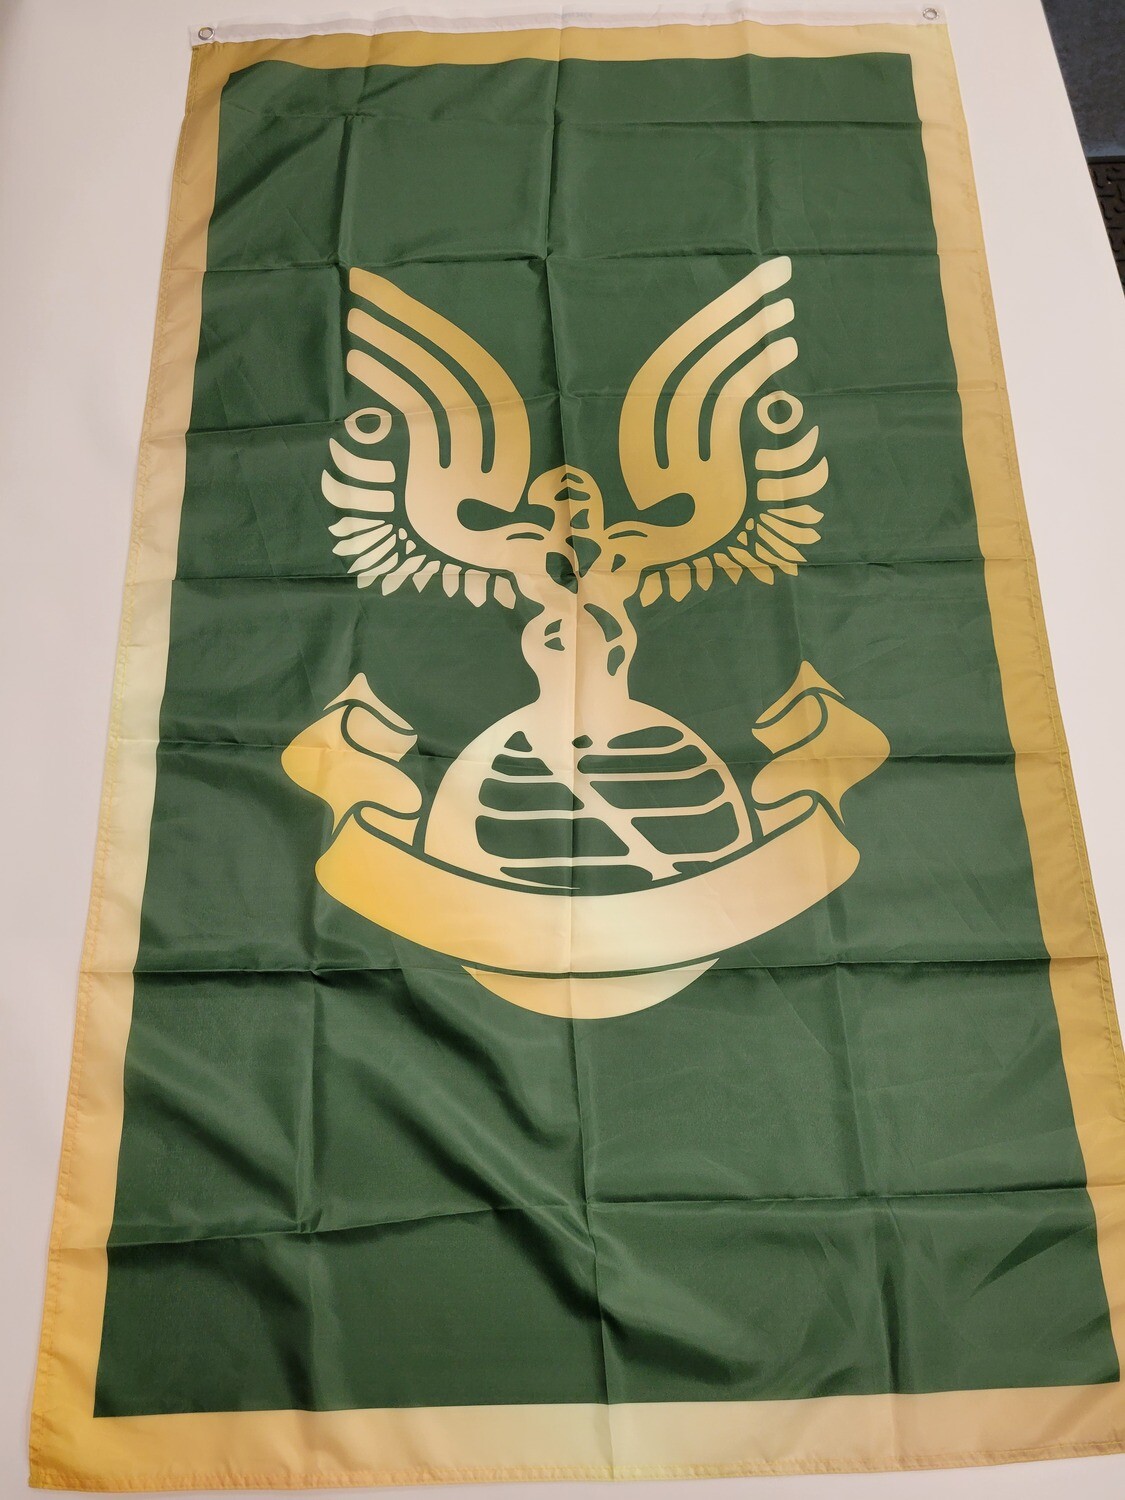 3'x5' Olive Drab UNSC Flag